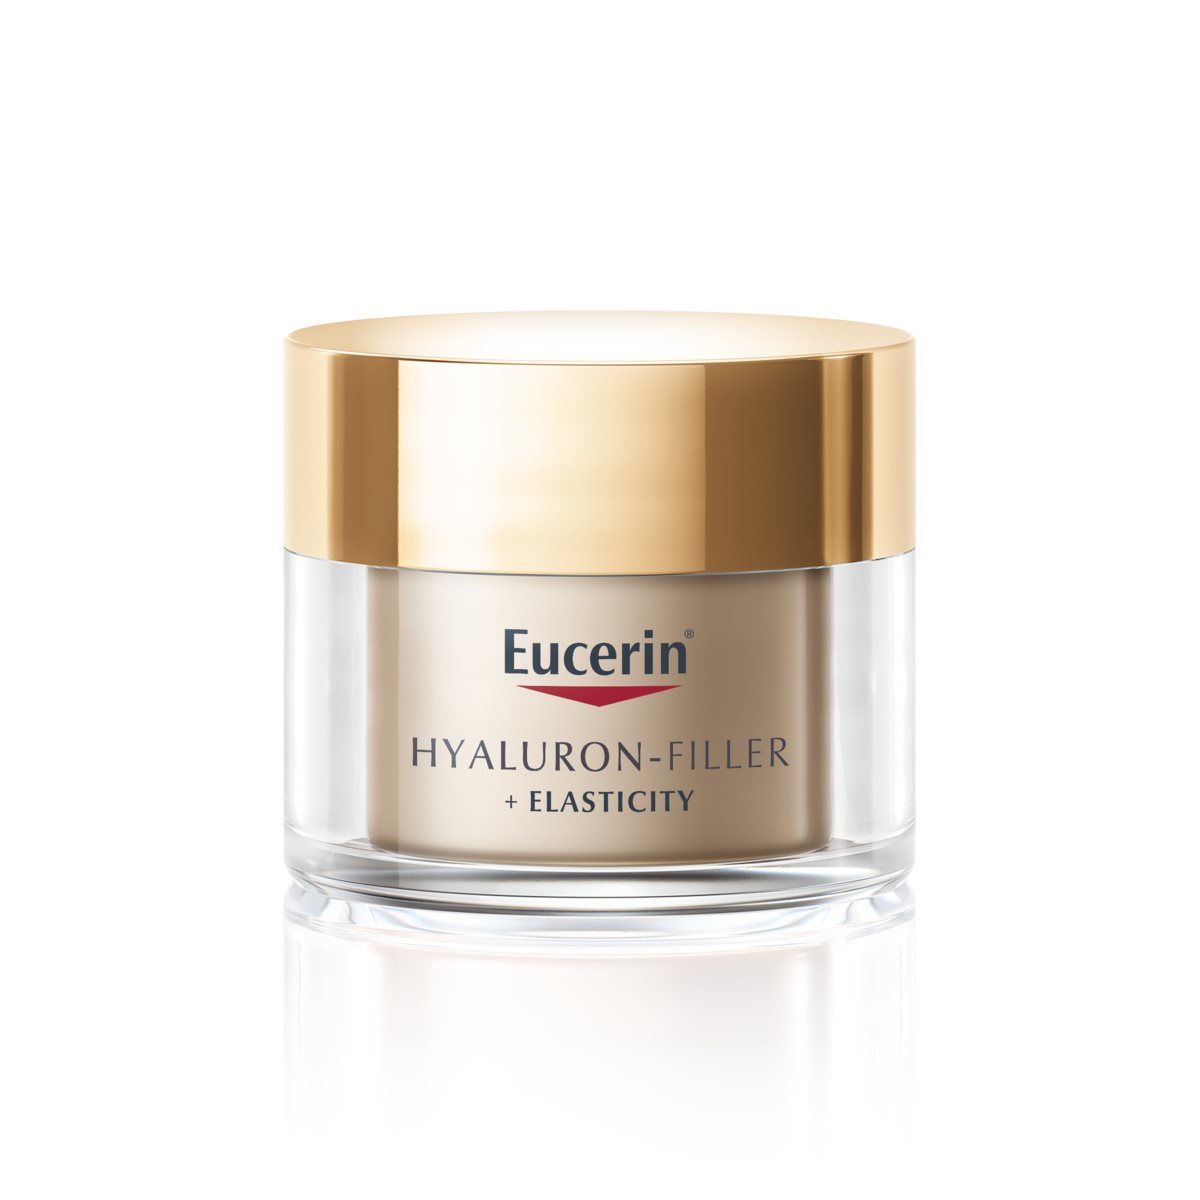 Eucerin Hyaluron-Filler + Elasticity нощен крем за старчески петна